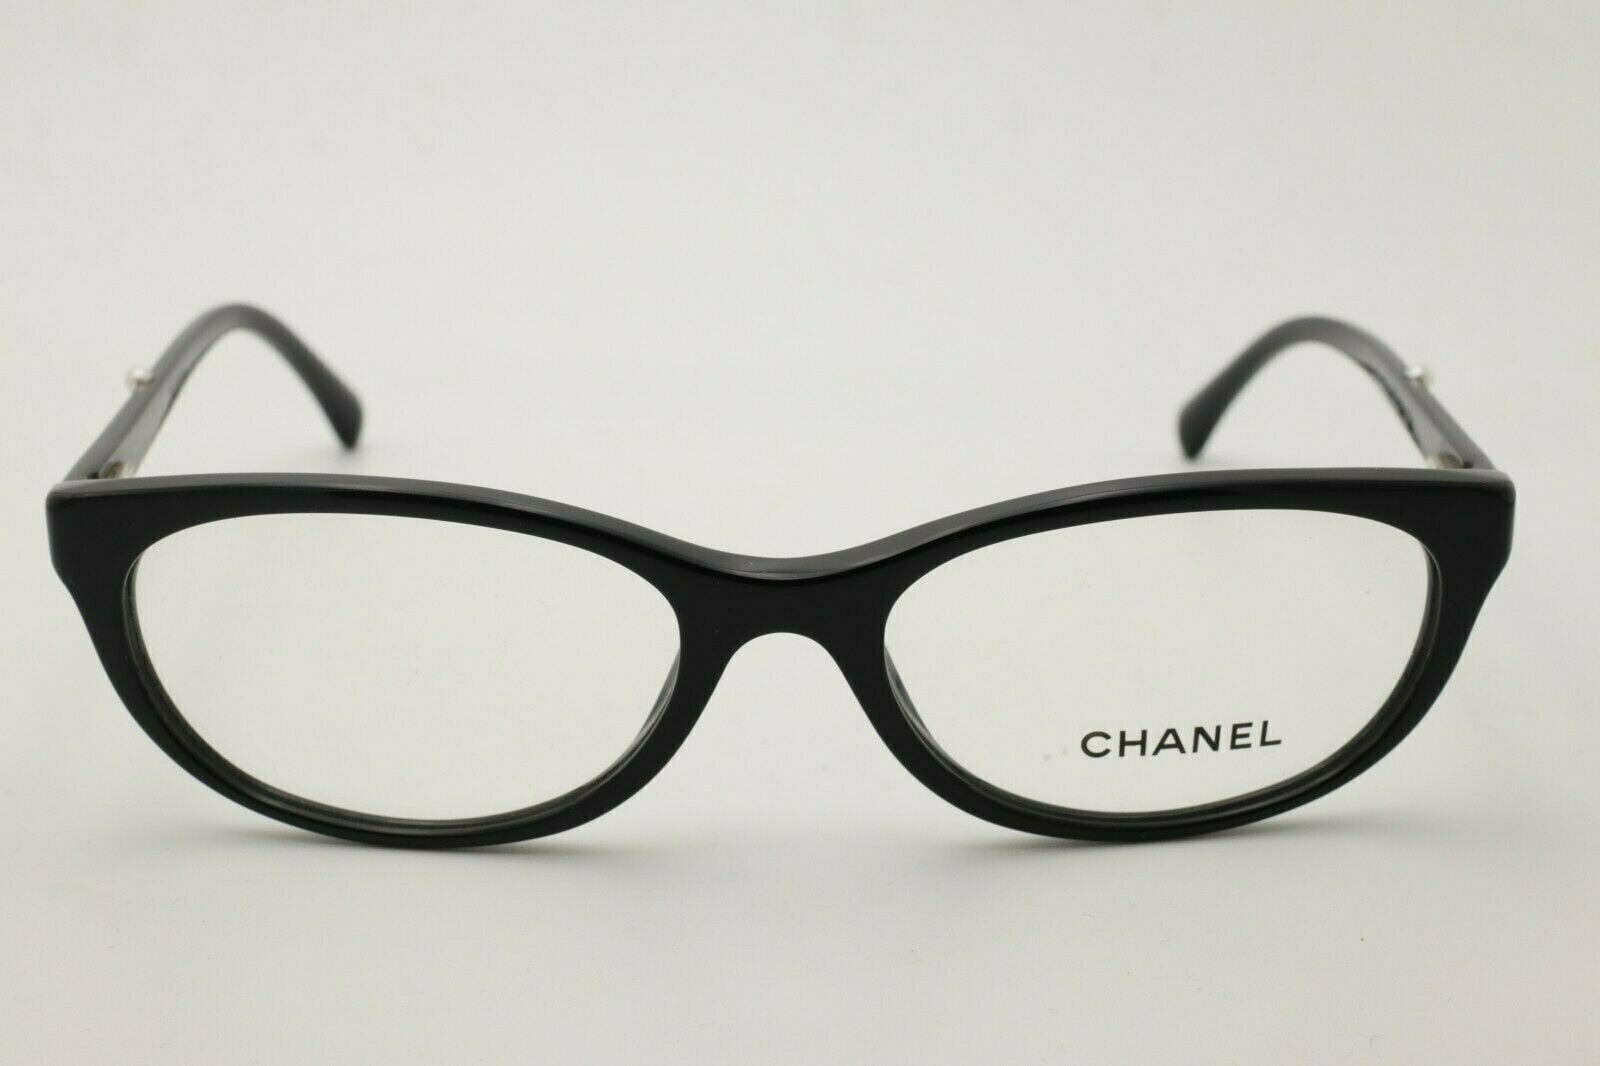 New Authentic Chanel Eyeglasses CH 3254-H c.501 Black Frames No Case 